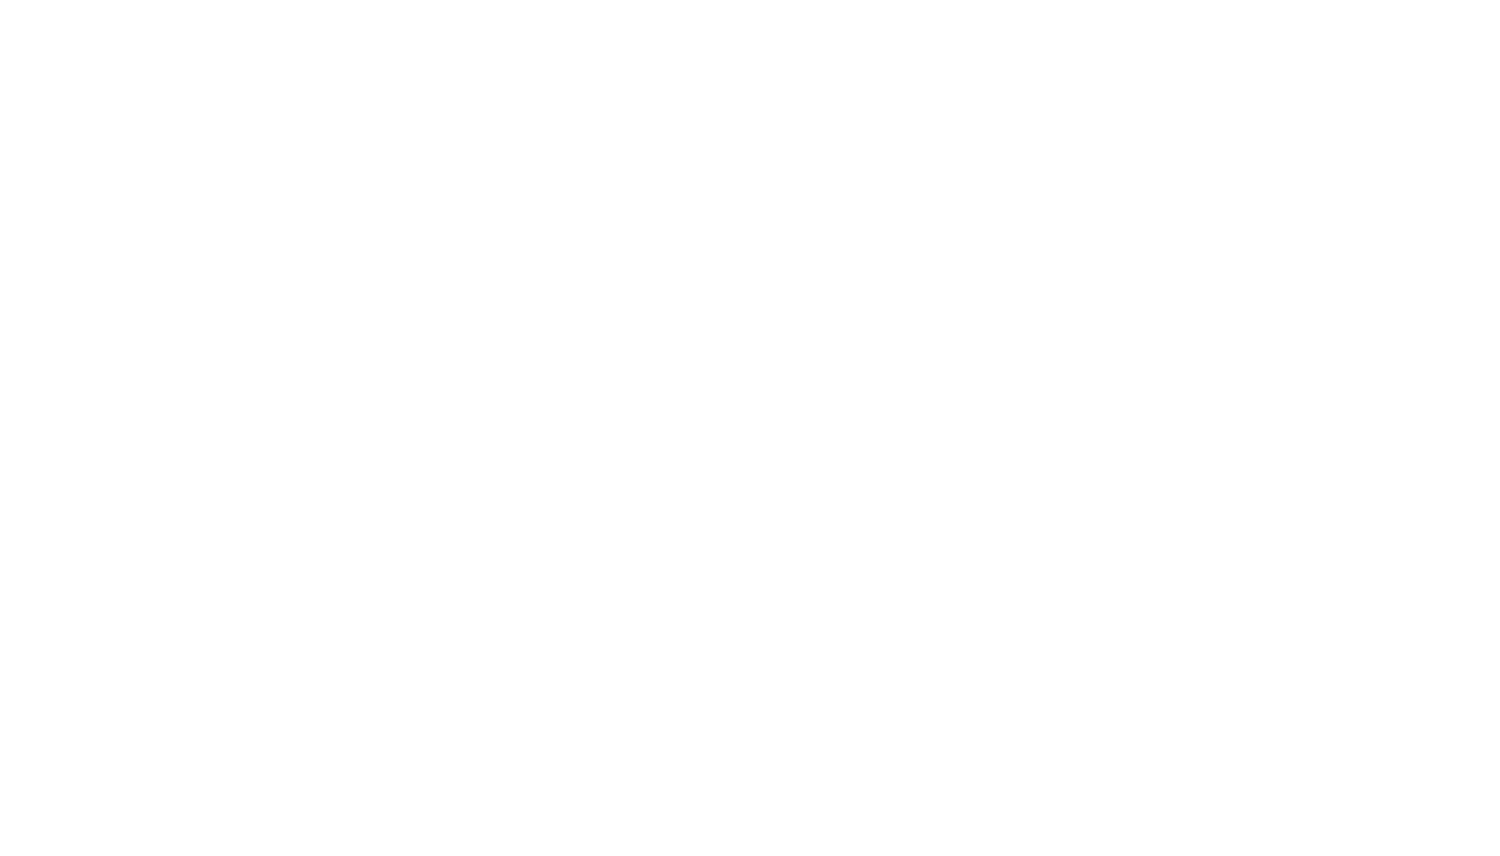 Christian Machowski Photography